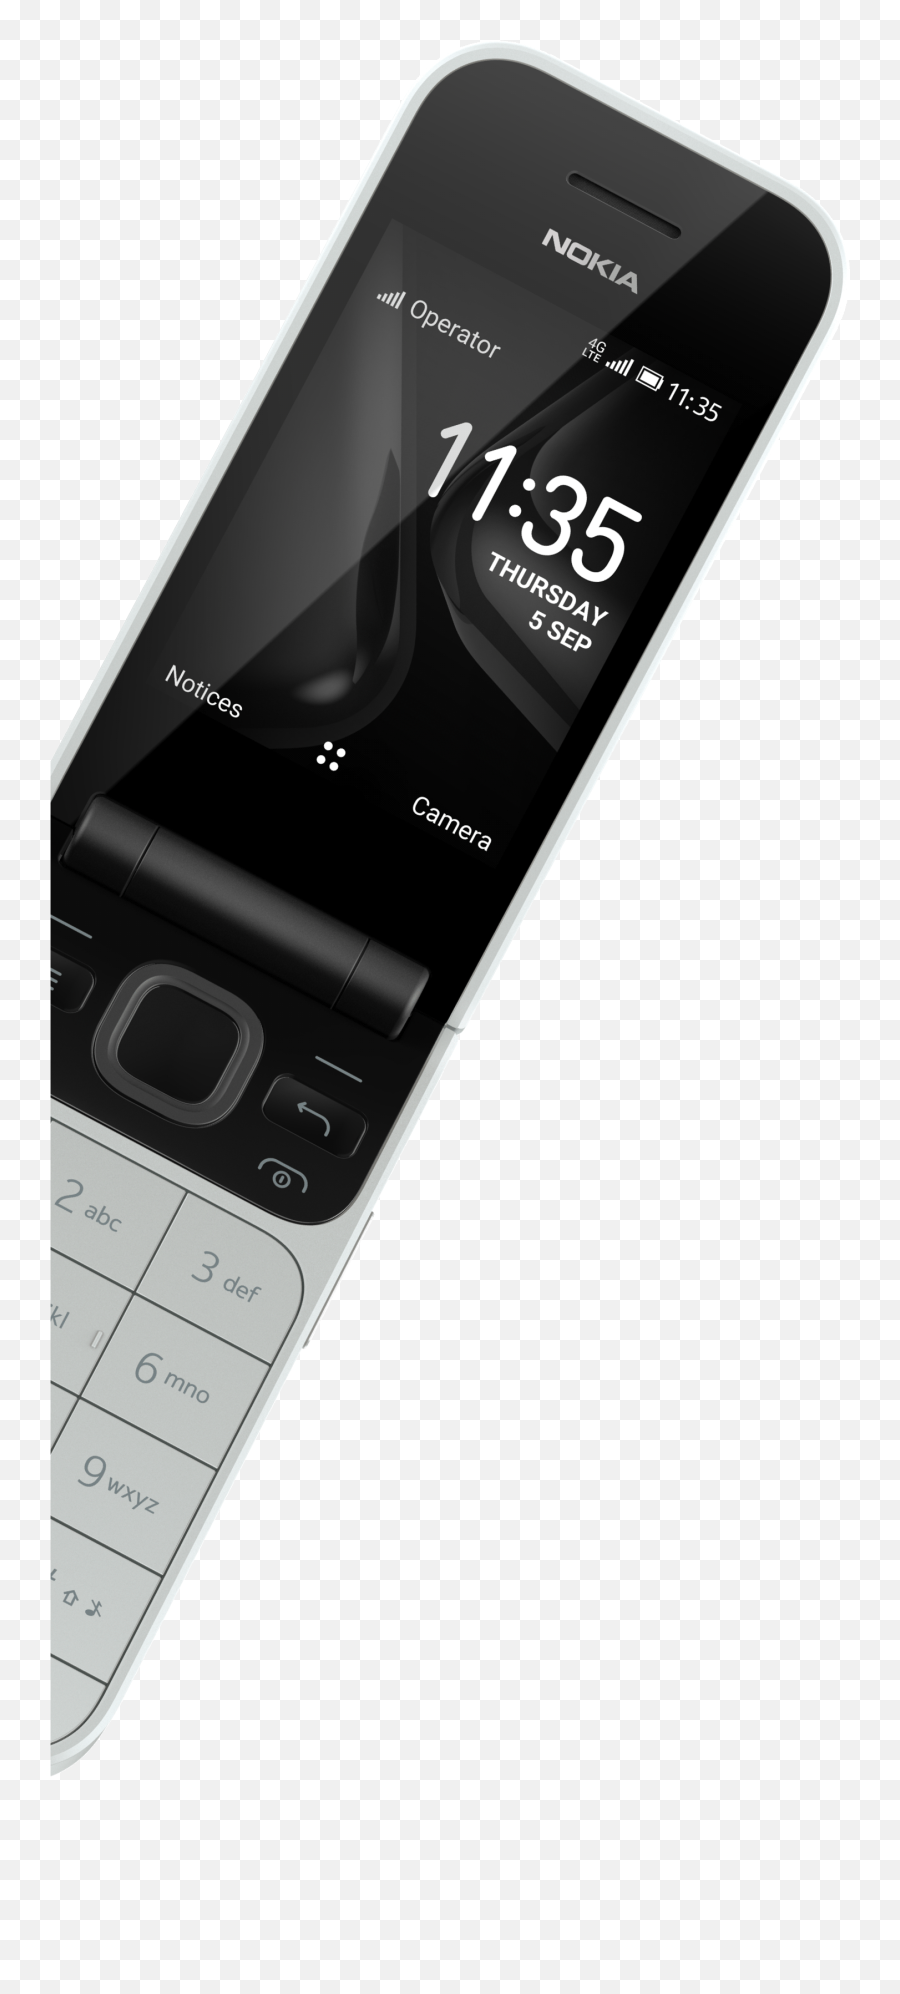 Nokia 2720 Flip Nokia Phones United Kingdom - English Nokia 2720 Flip Emoji,Nokia Emojis